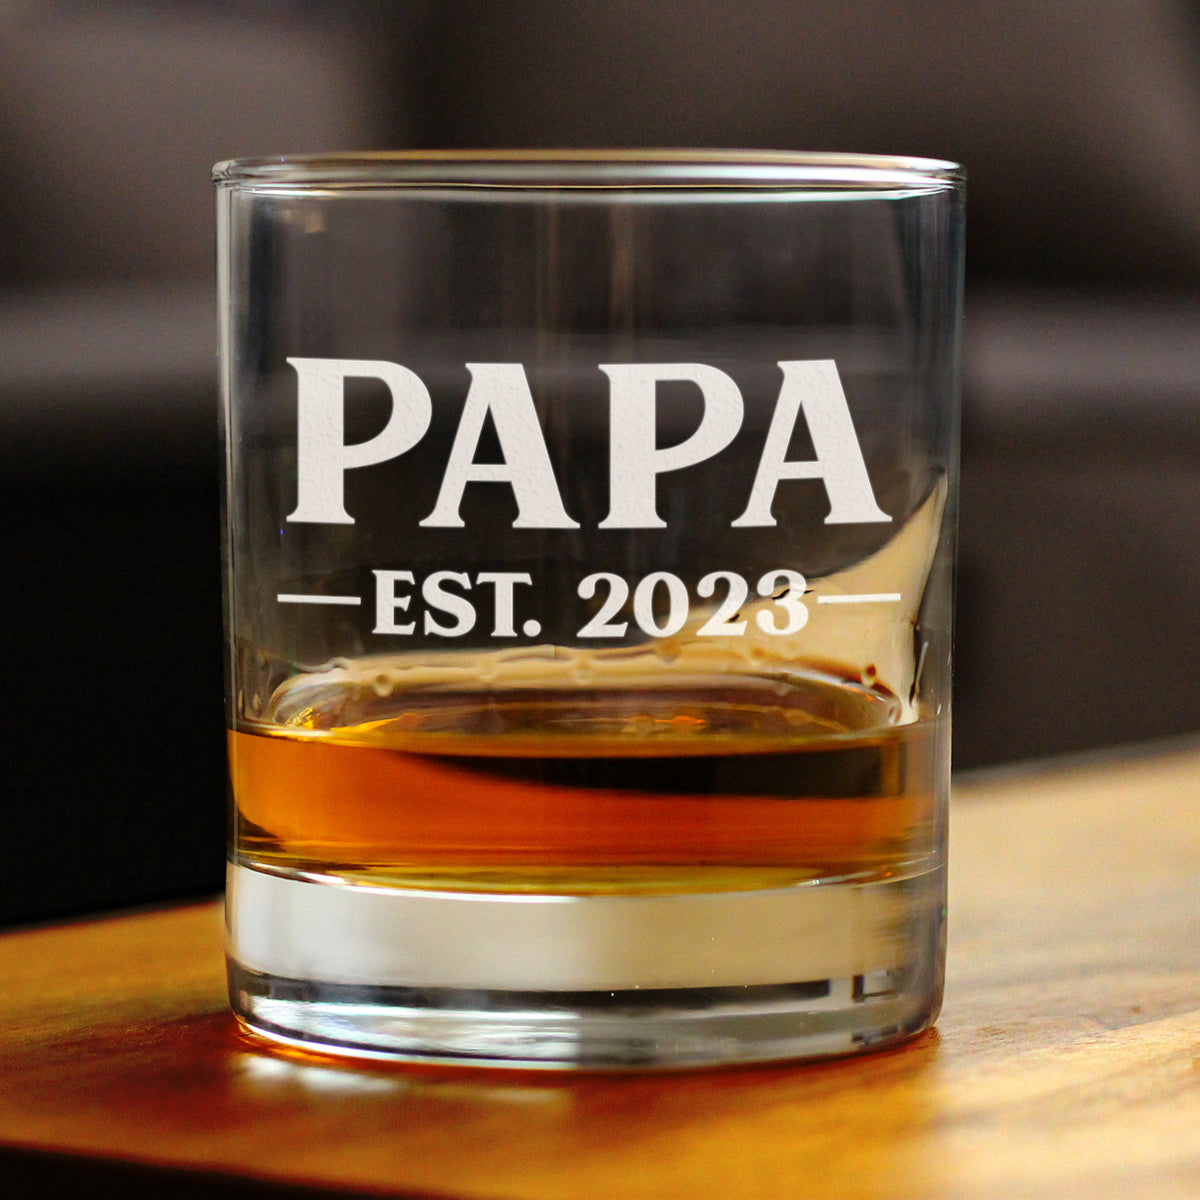 Papa Est. 2023 - Bold - 10 Ounce Rocks Glass